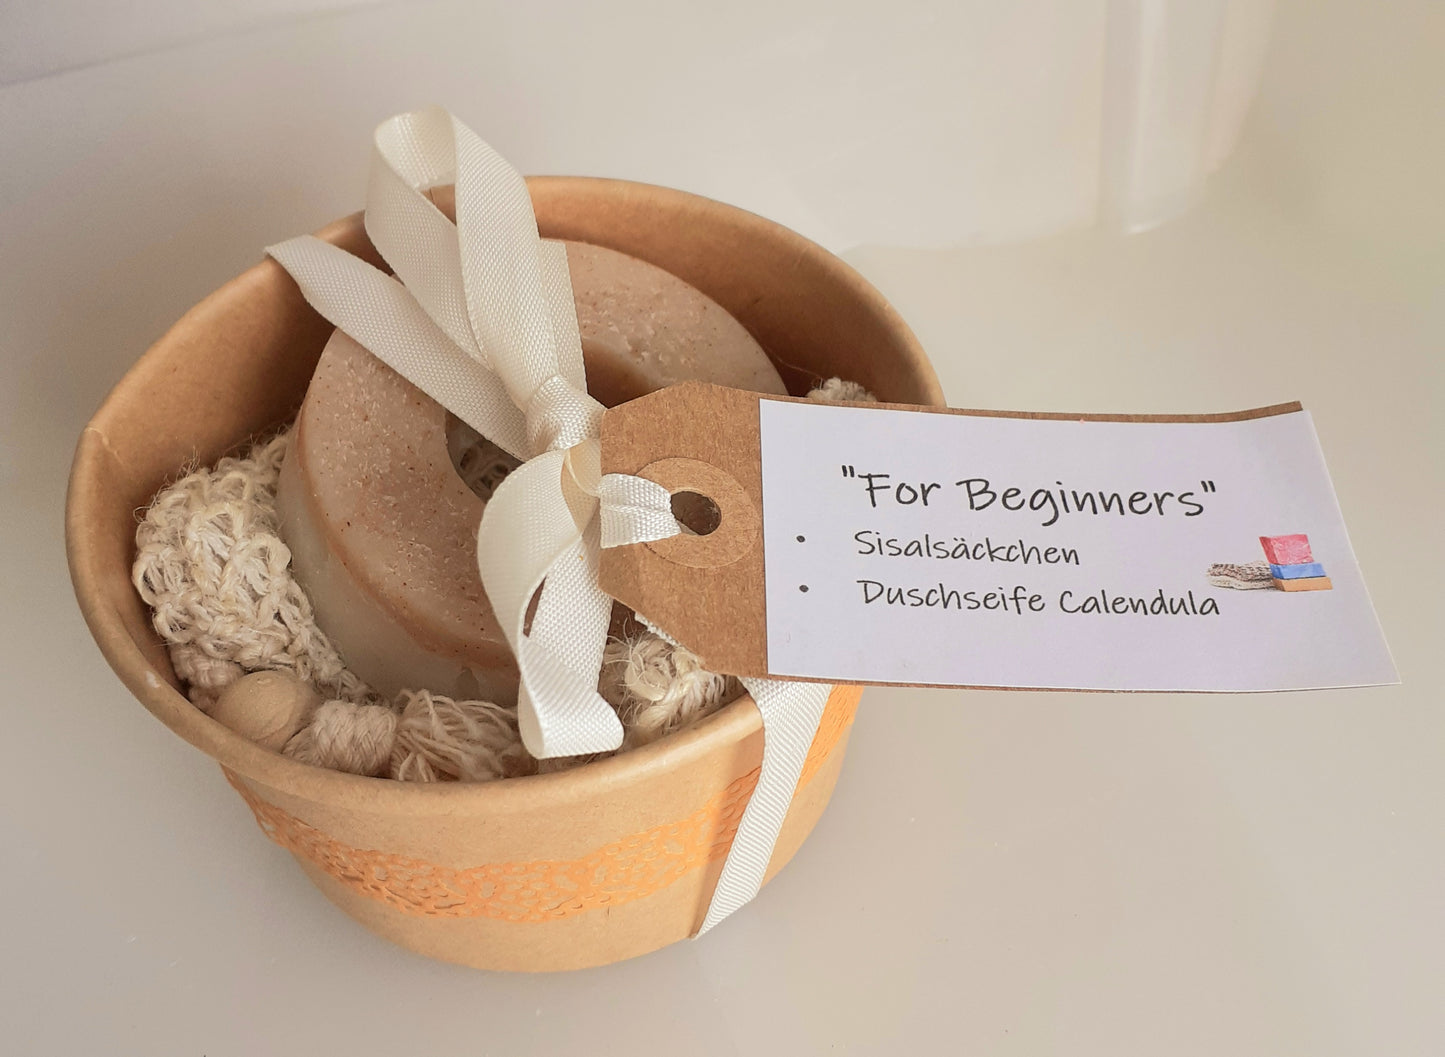 "For Beginners" Duschseife Calendula